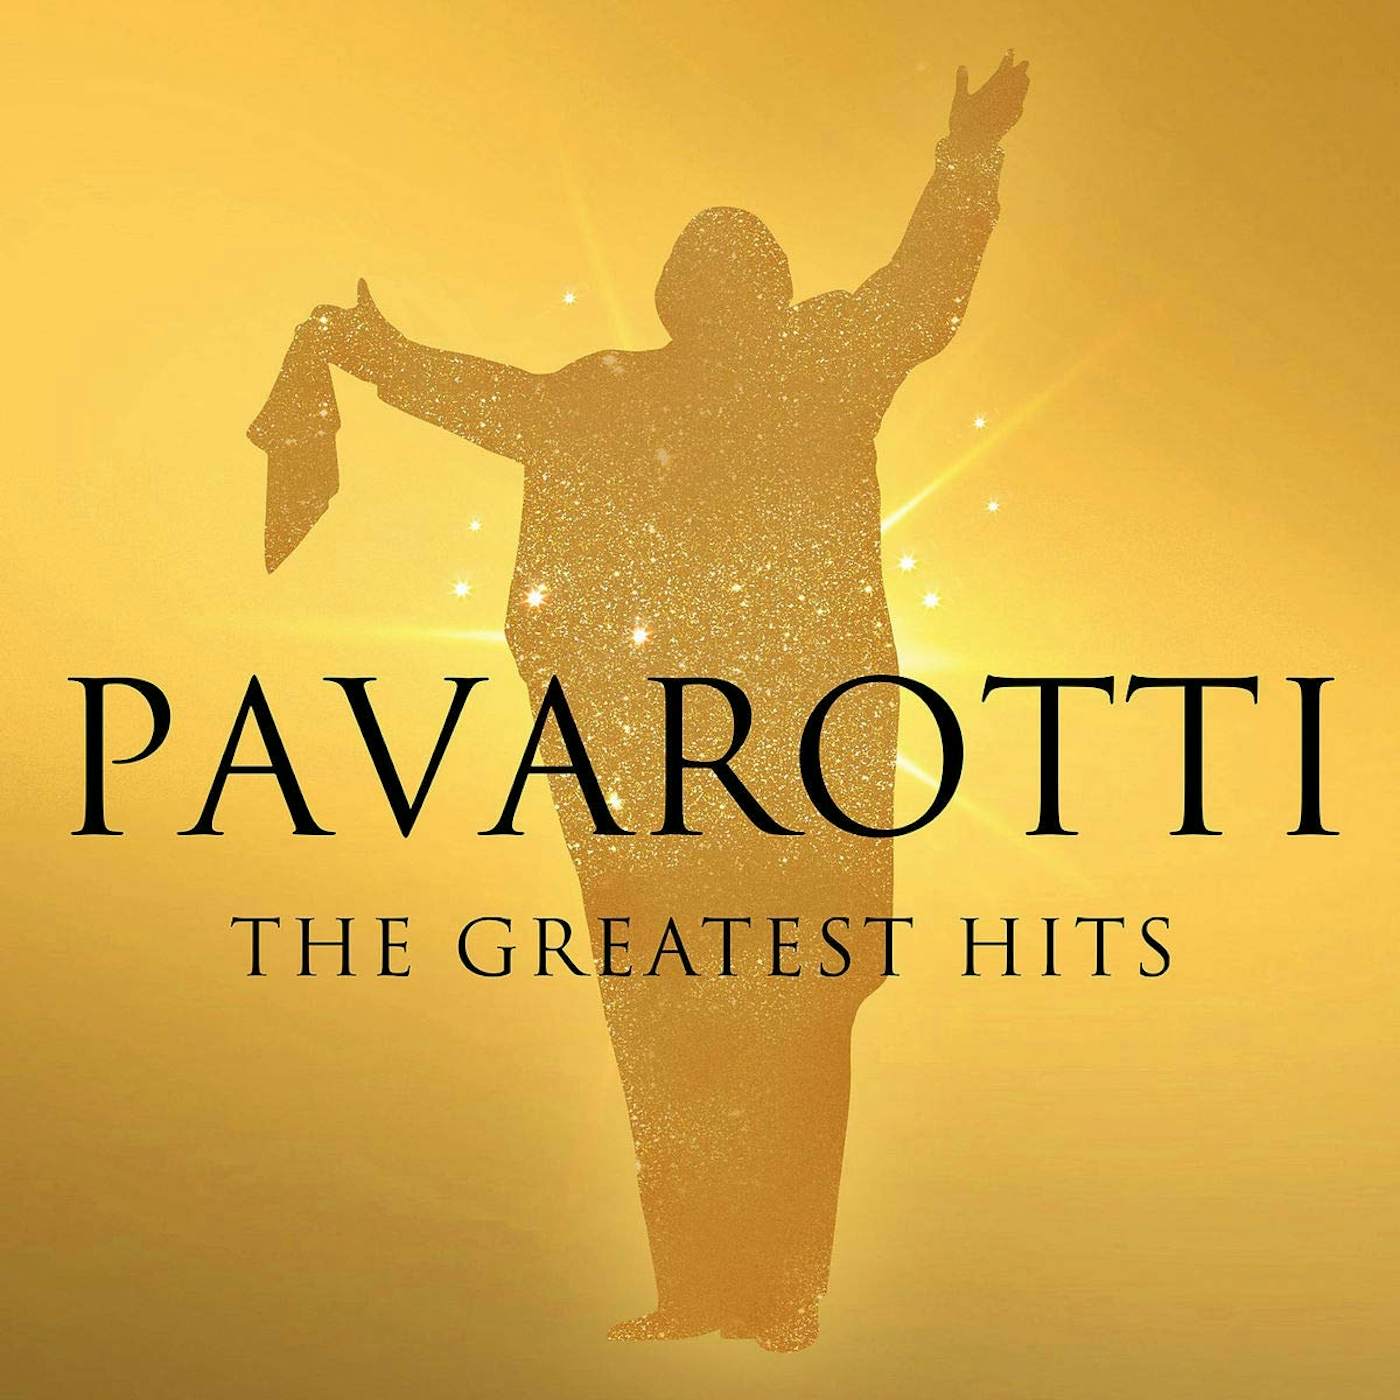 Luciano Pavarotti GREATEST HITS CD